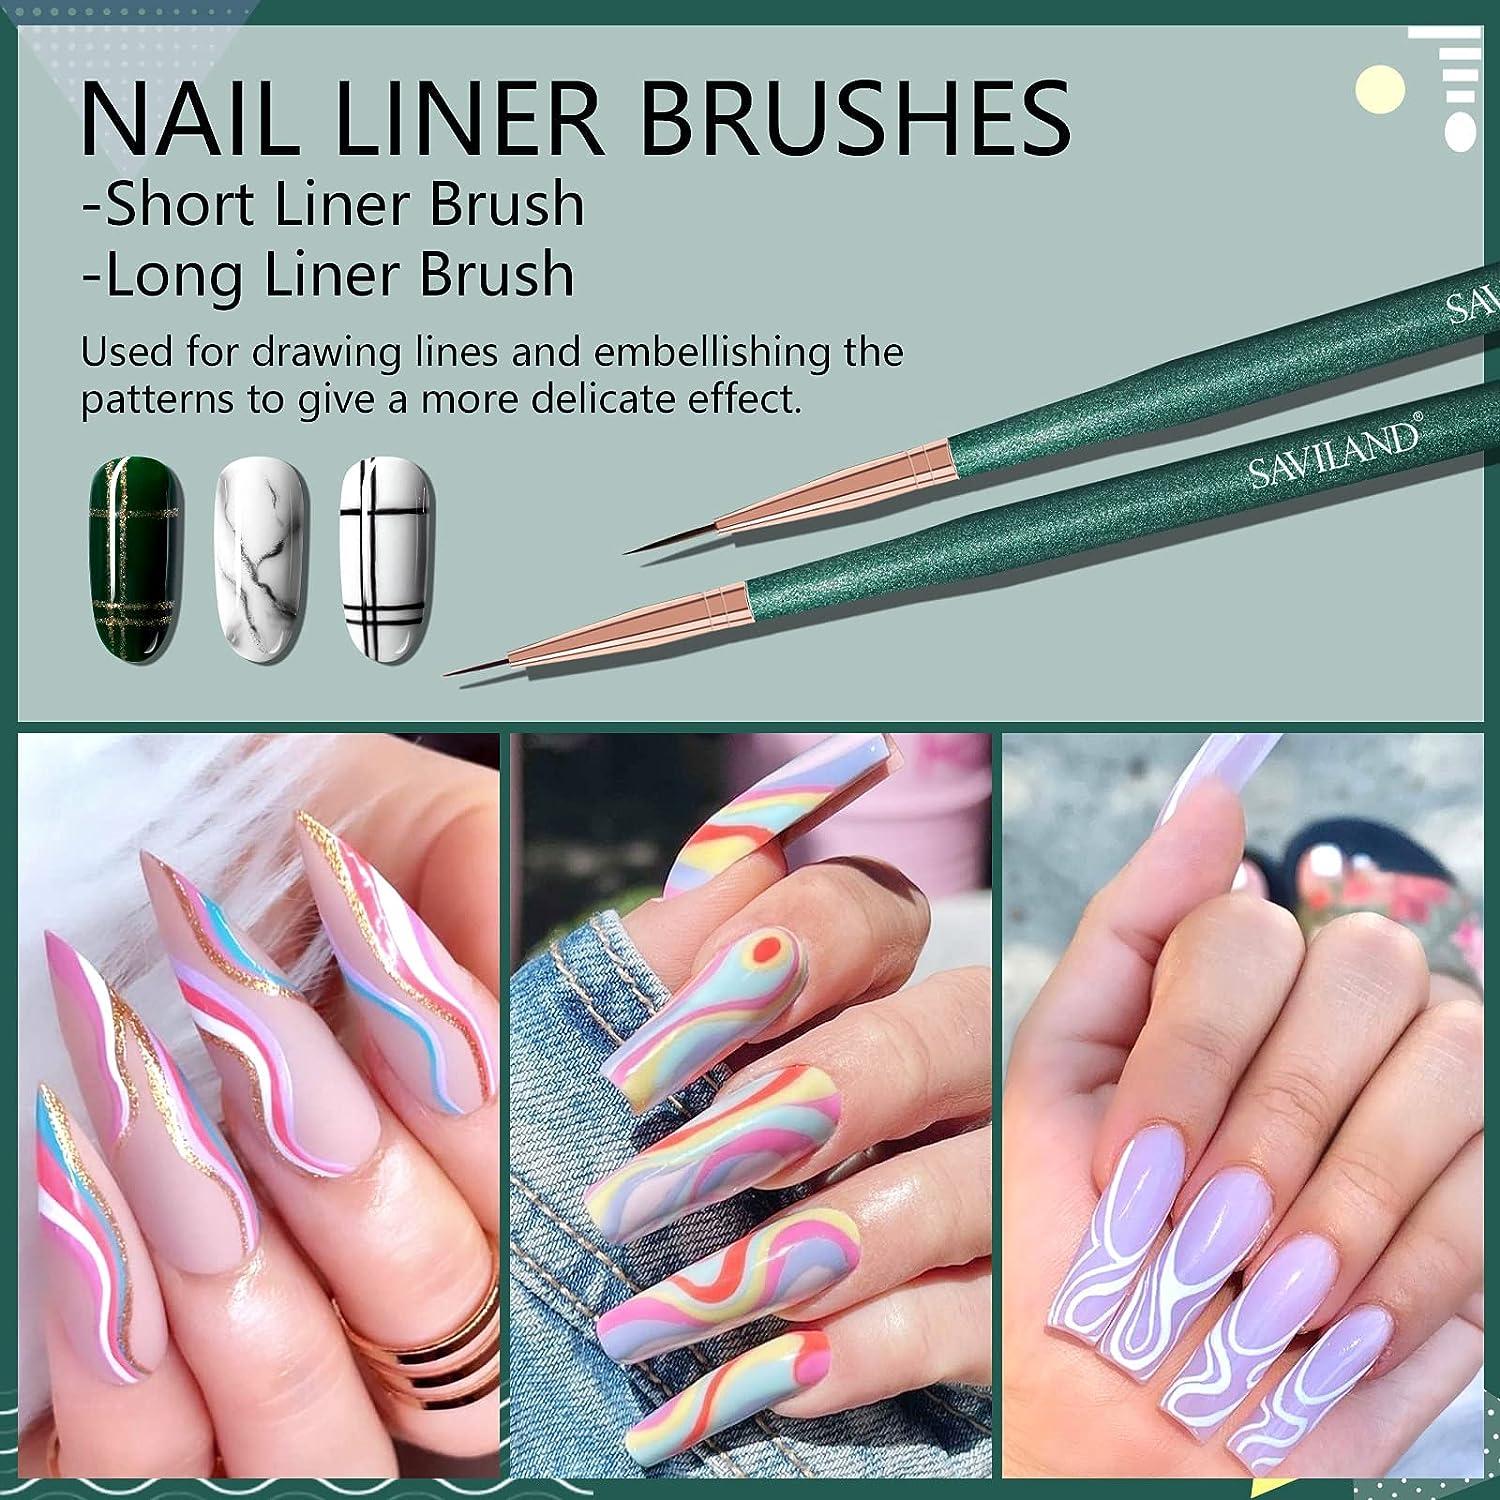 Nail Art Liner Brushes